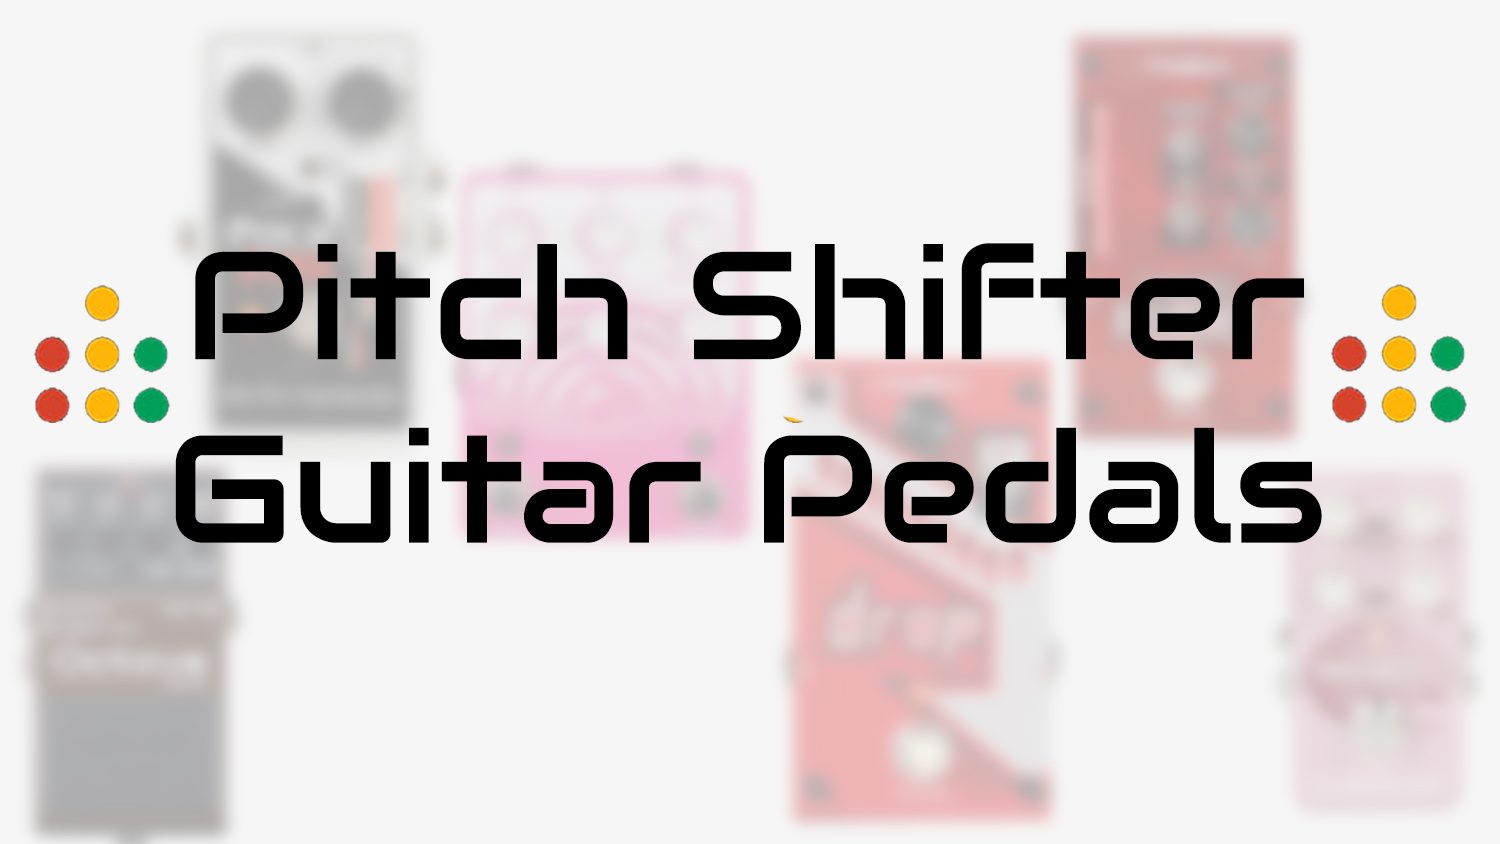 best pitch shifter guitar pedals